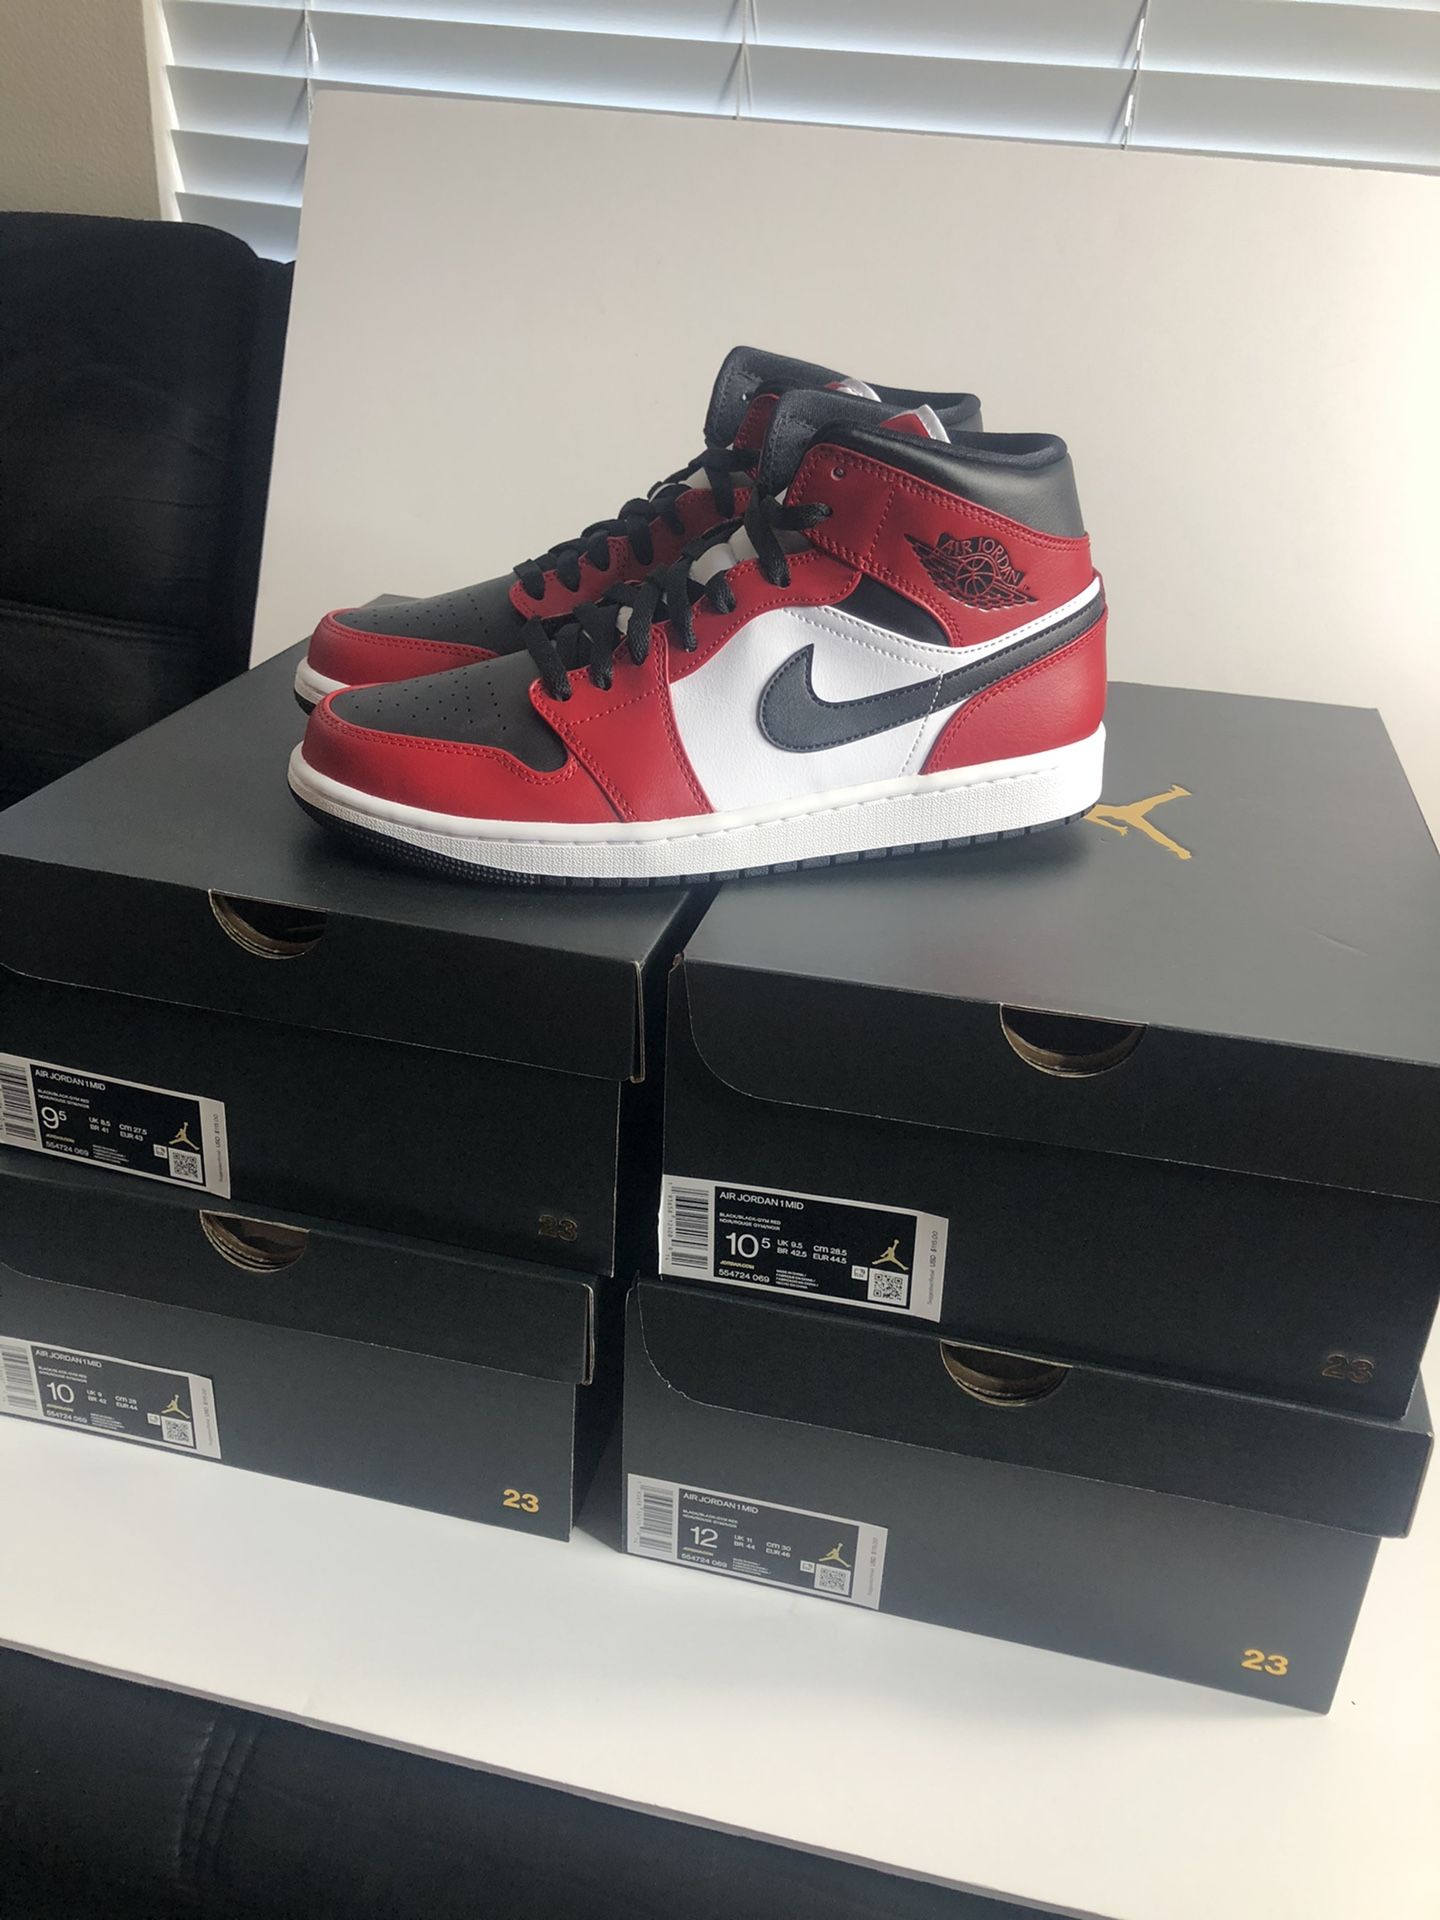 Nike air Jordan 1 Chicago mid size 10 10.5 12 brand new